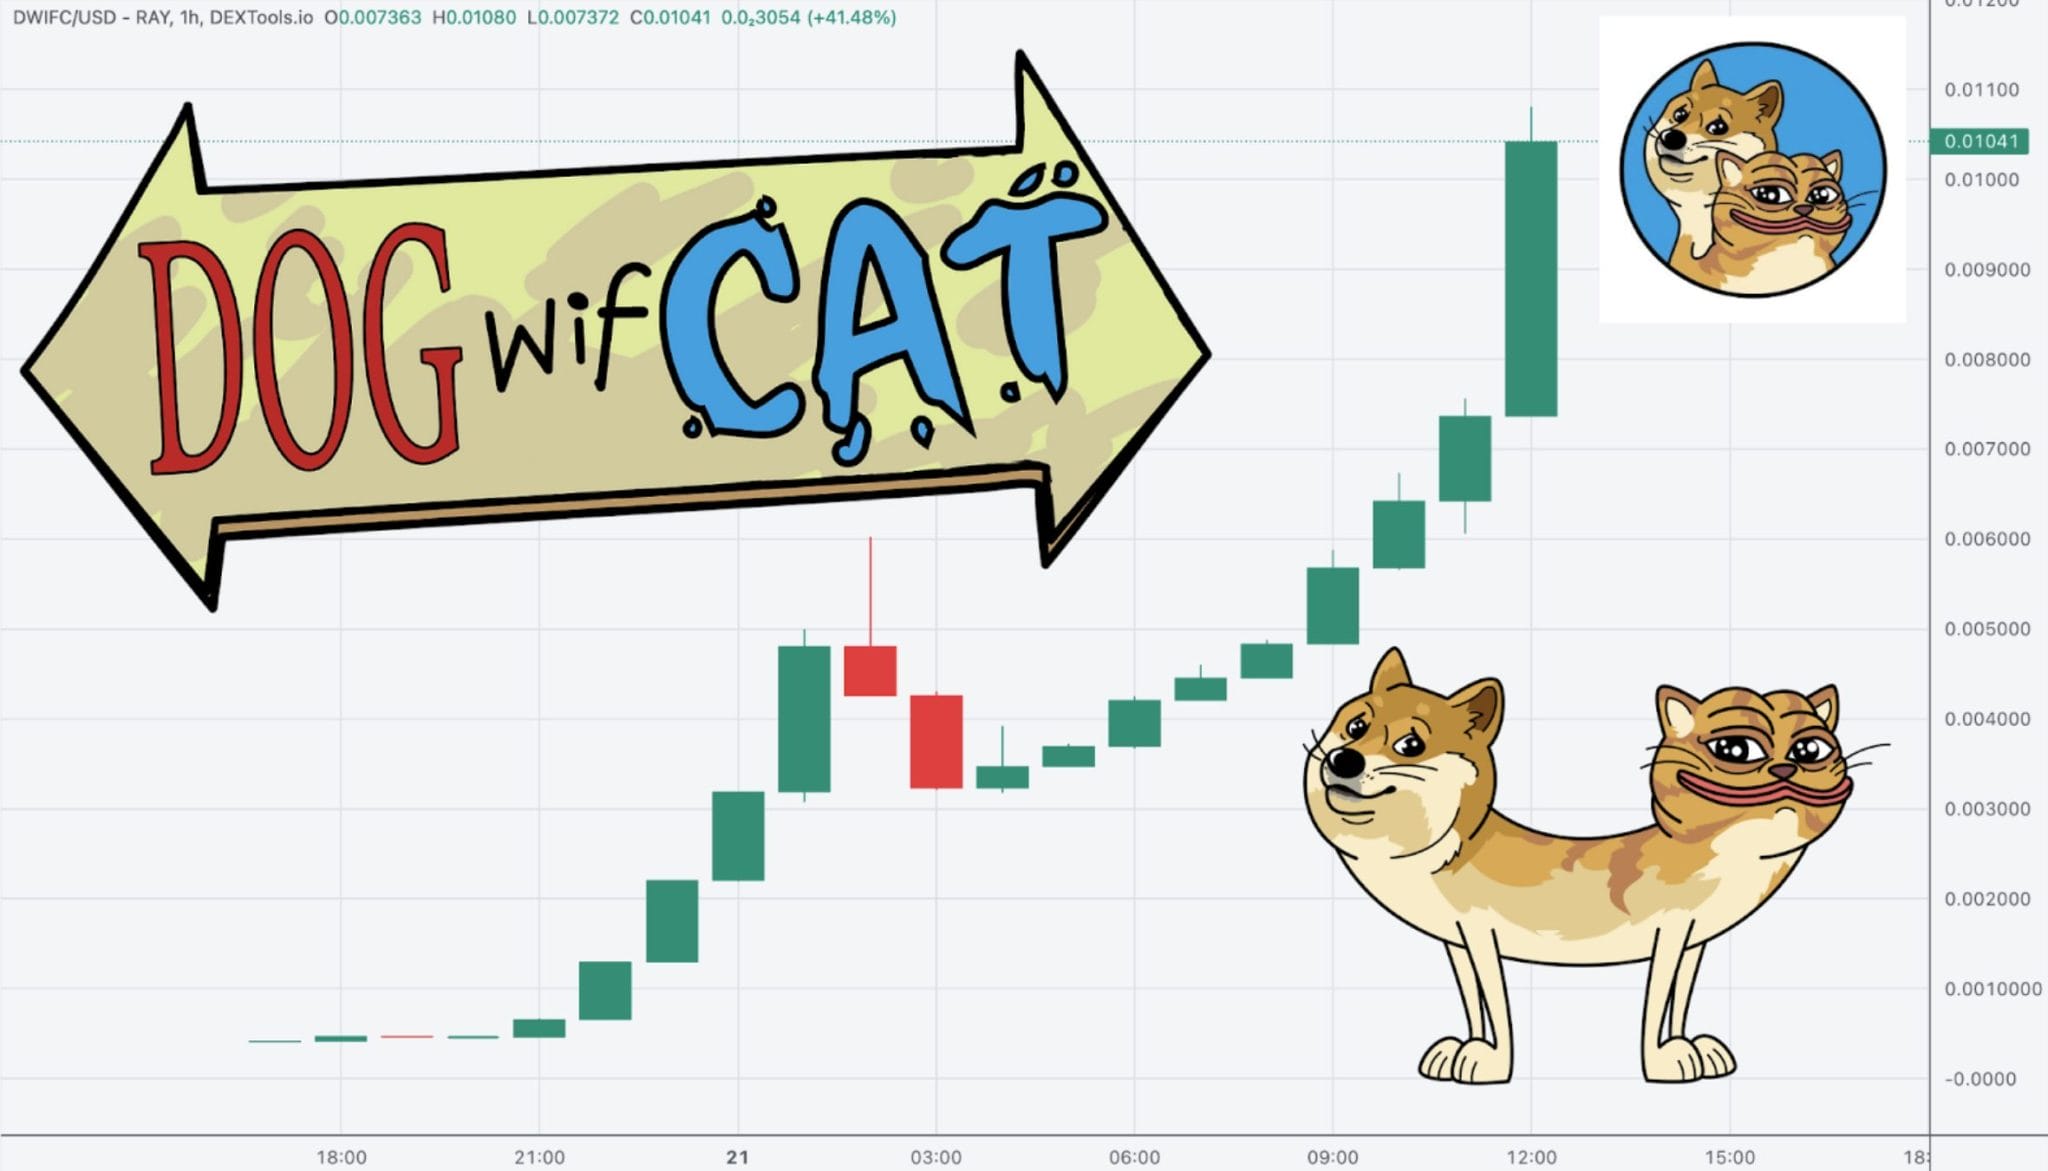 dofwifcat chart